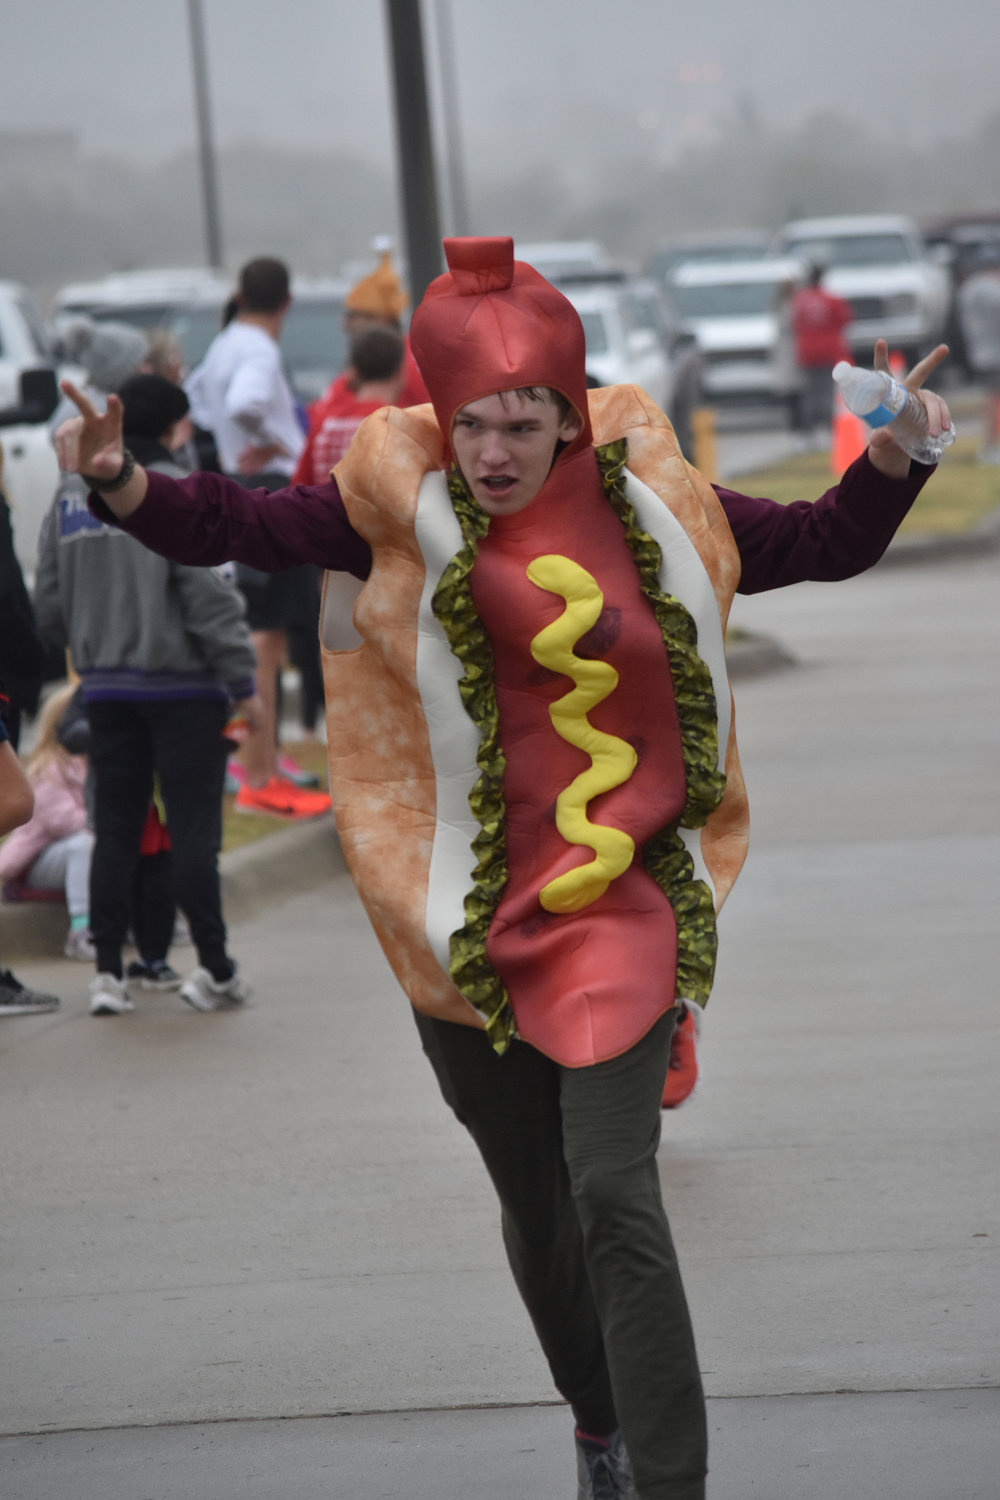 Hot dog! Noah Kieta finishes the race in costume.